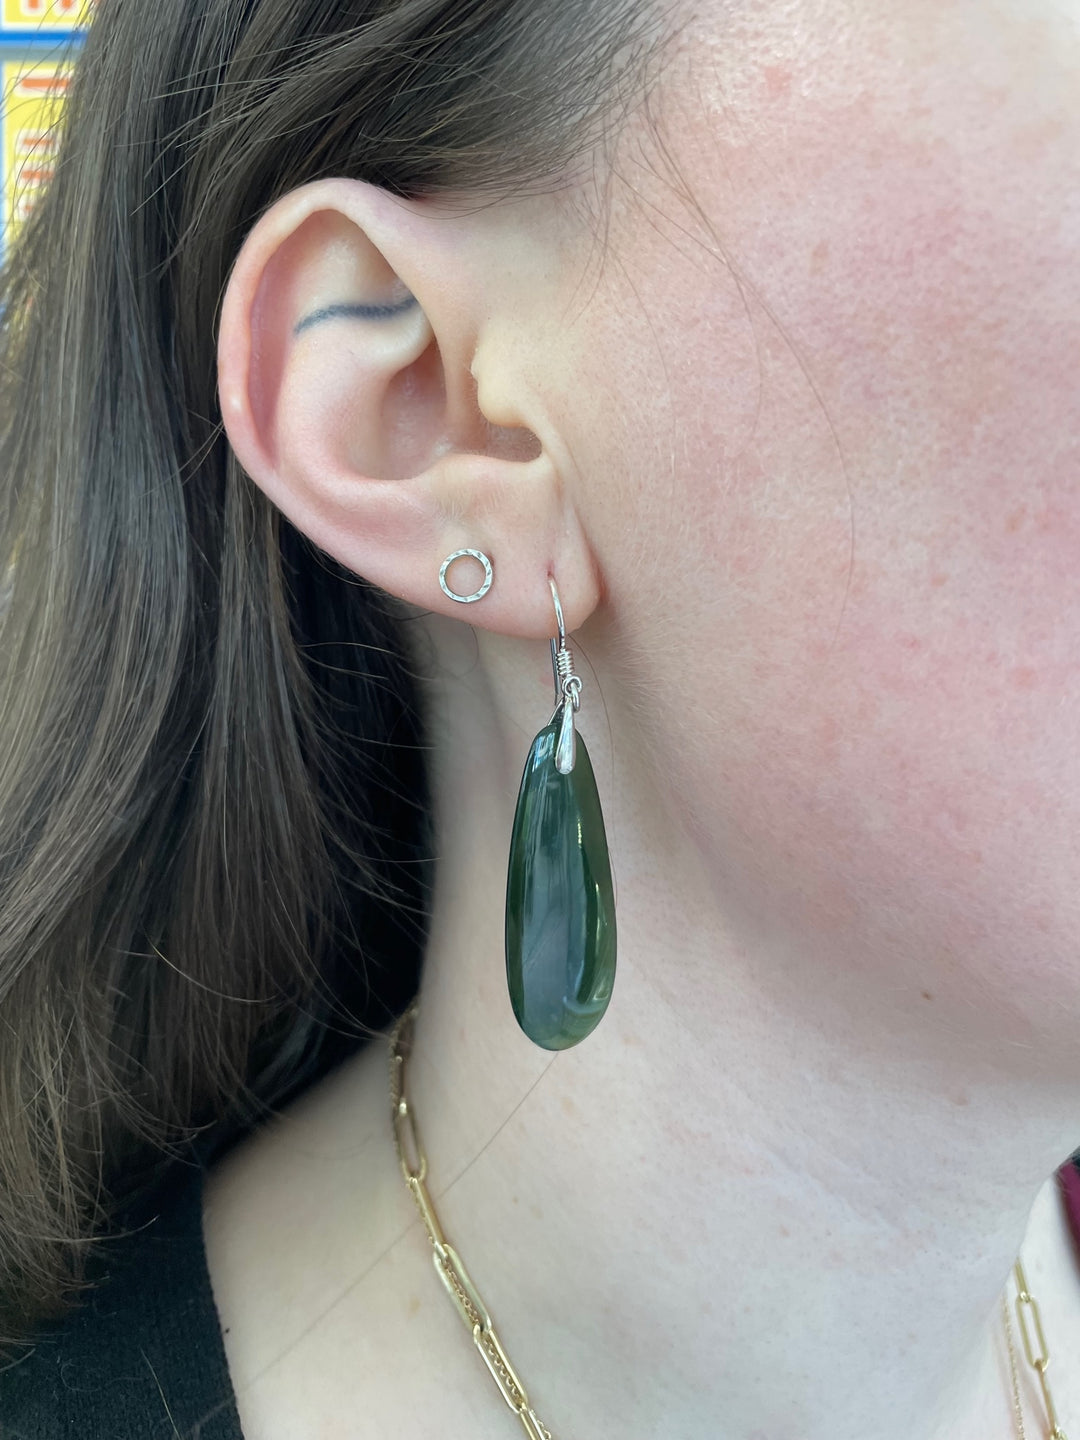 Dark New Zealand greenstone matched earrings